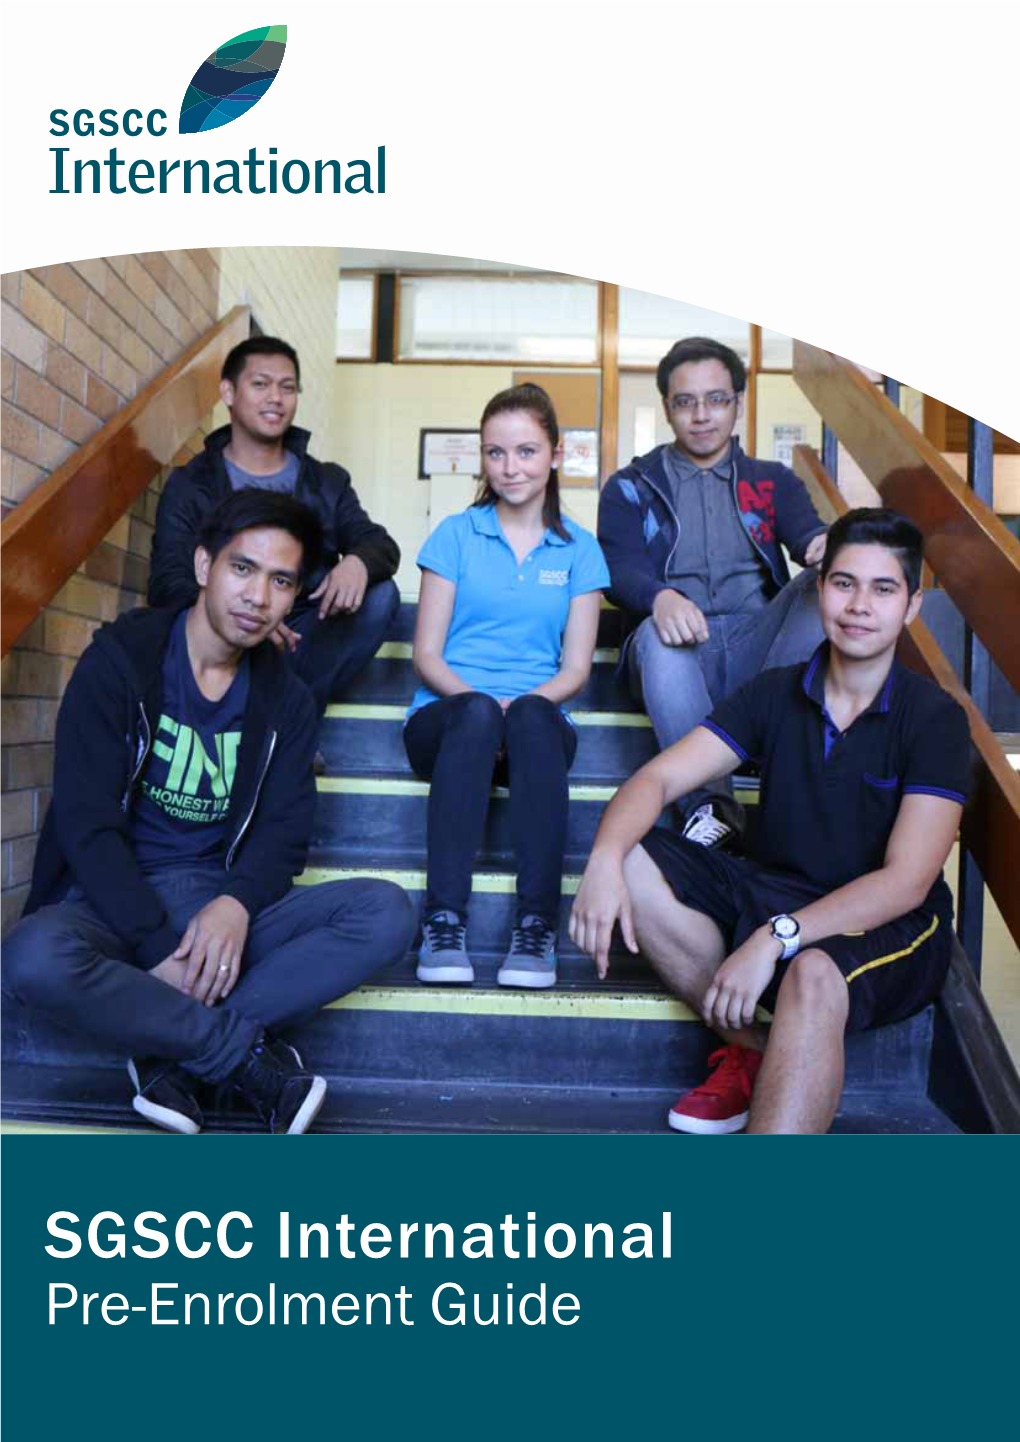 SGSCC International Pre-Enrolment Guide WELCOME to SGSCC INTERNATIONAL